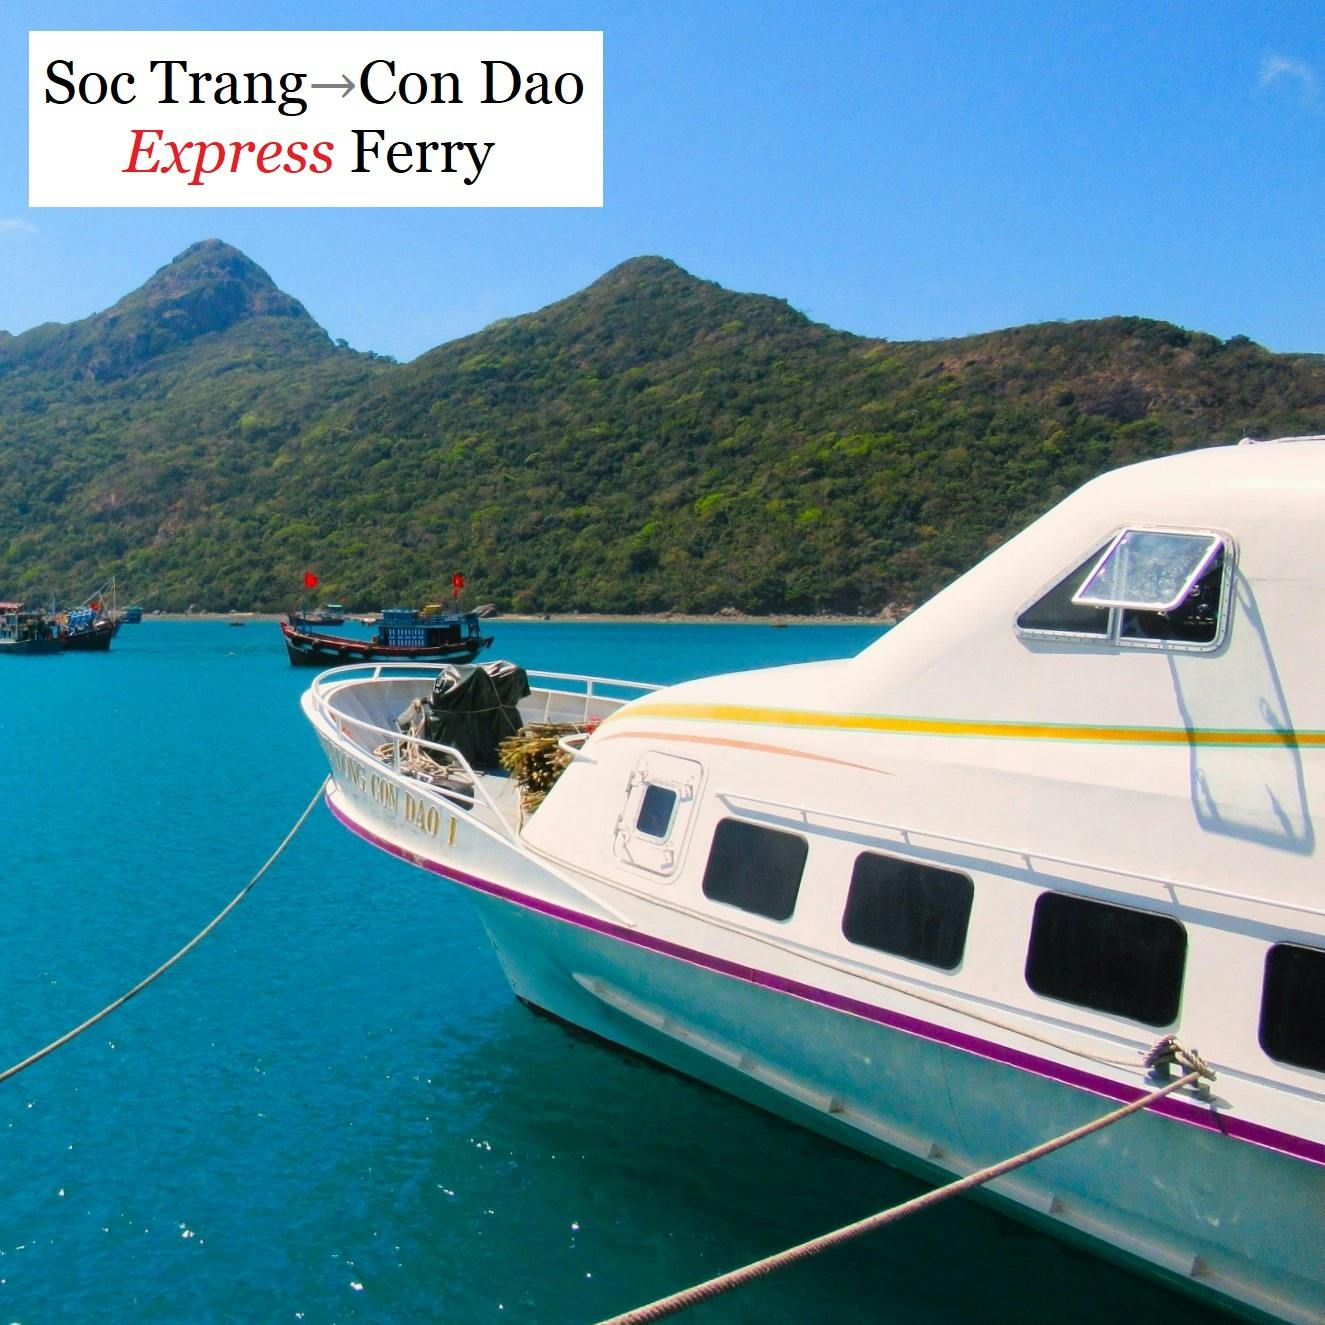 Soc Trang→Con Dao Express Ferry, Vietnam